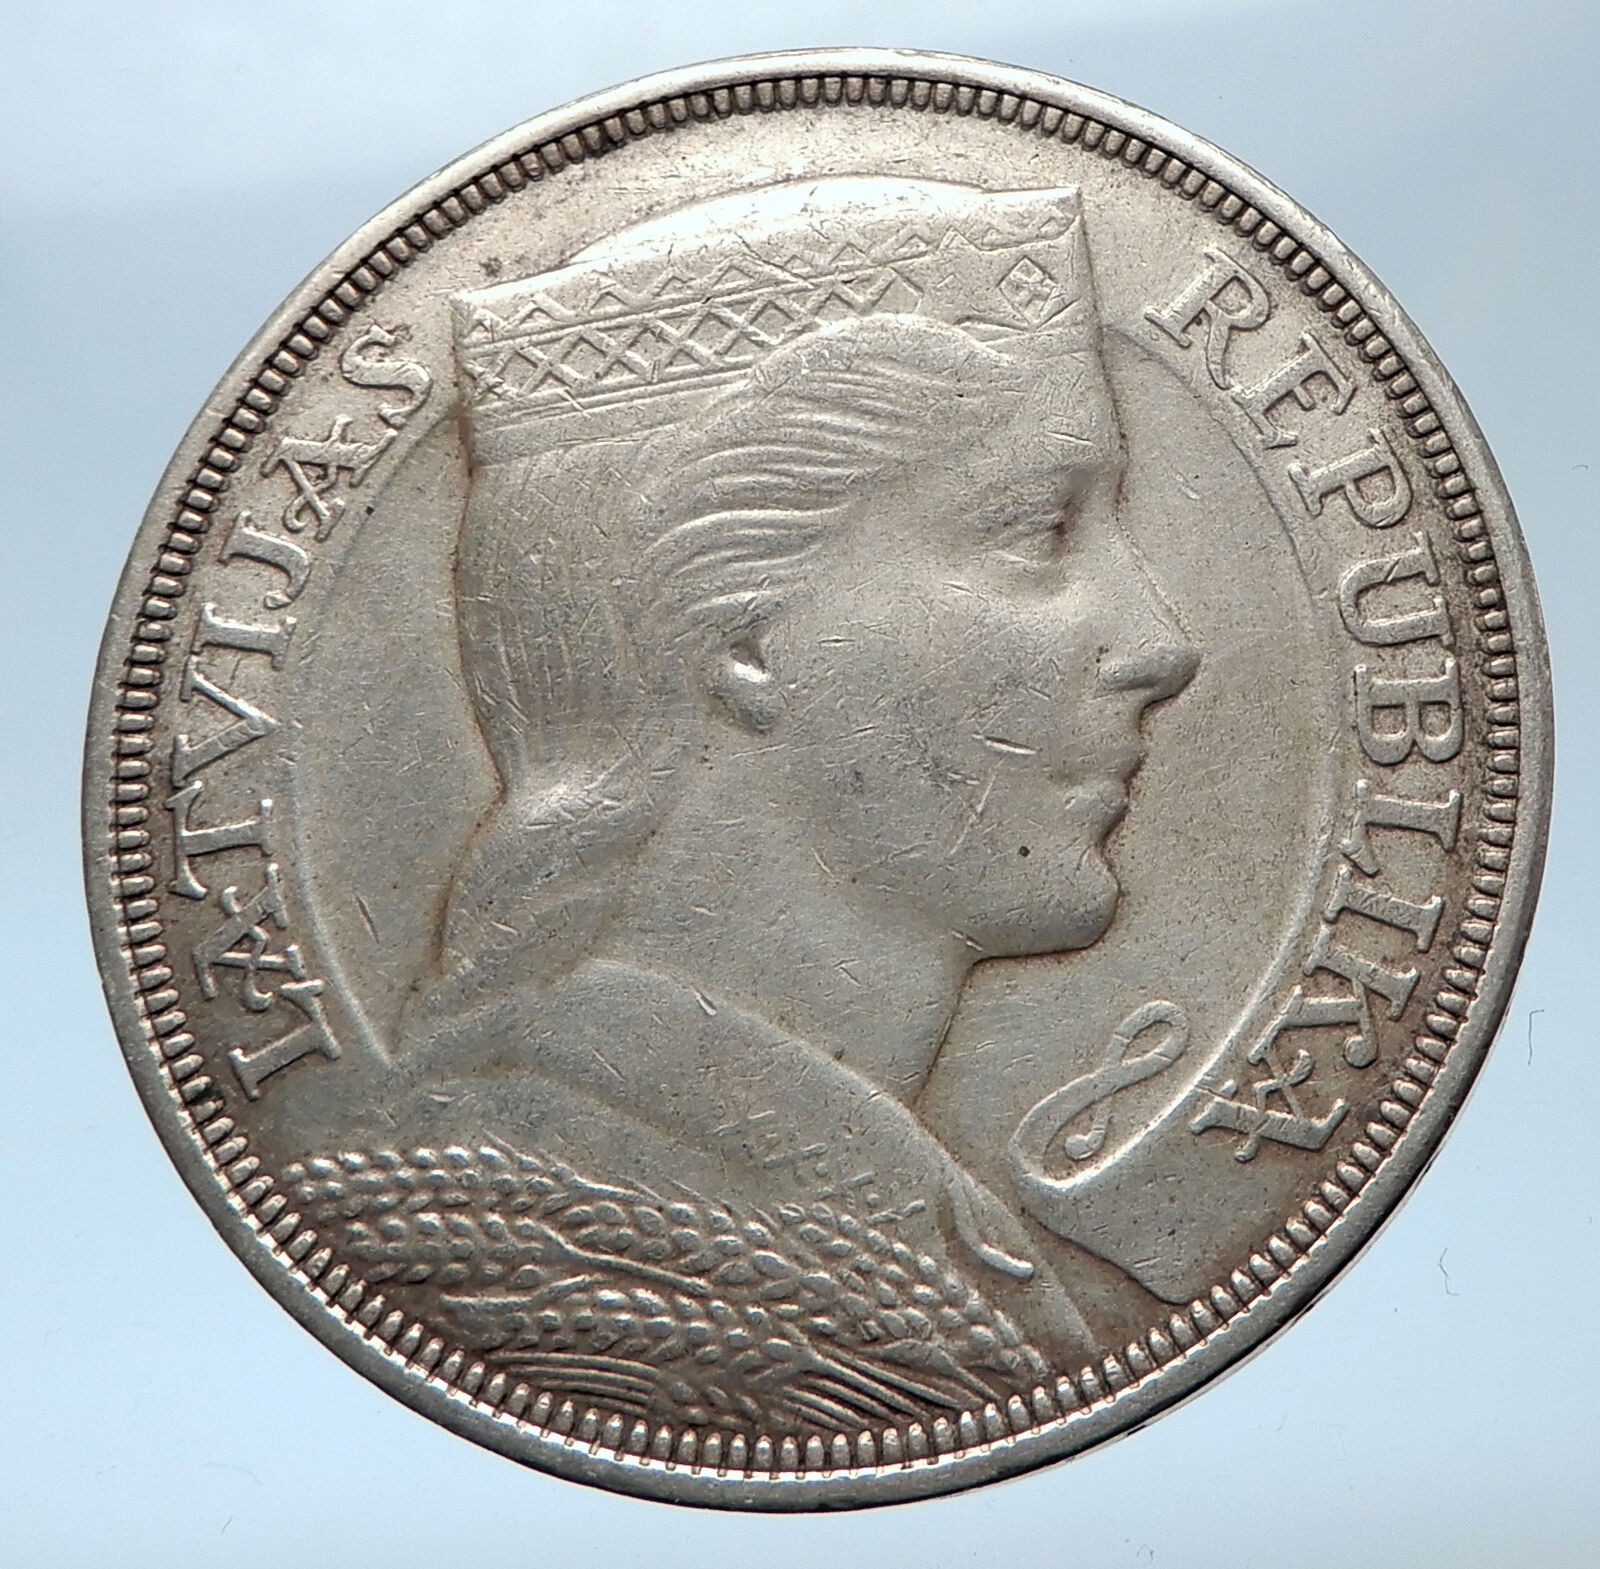 1931 LATVIA w Female Headwear 5 Lati LARGE Vintage Silver European Coin i73912